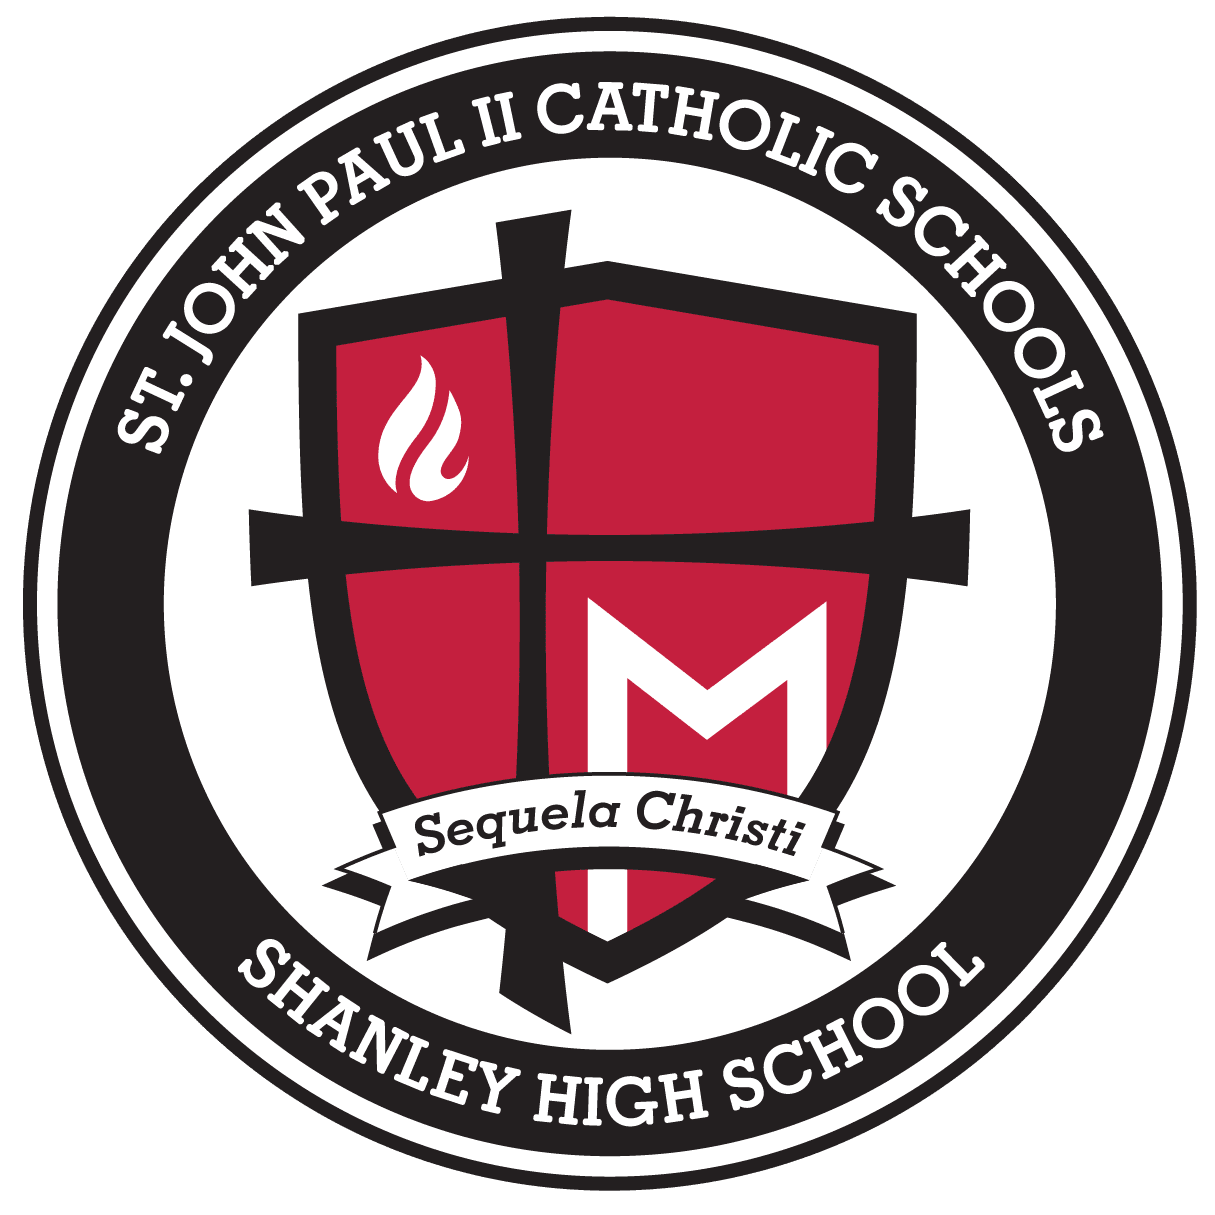 St. John Paul II Catholic Schools – Shanley High School